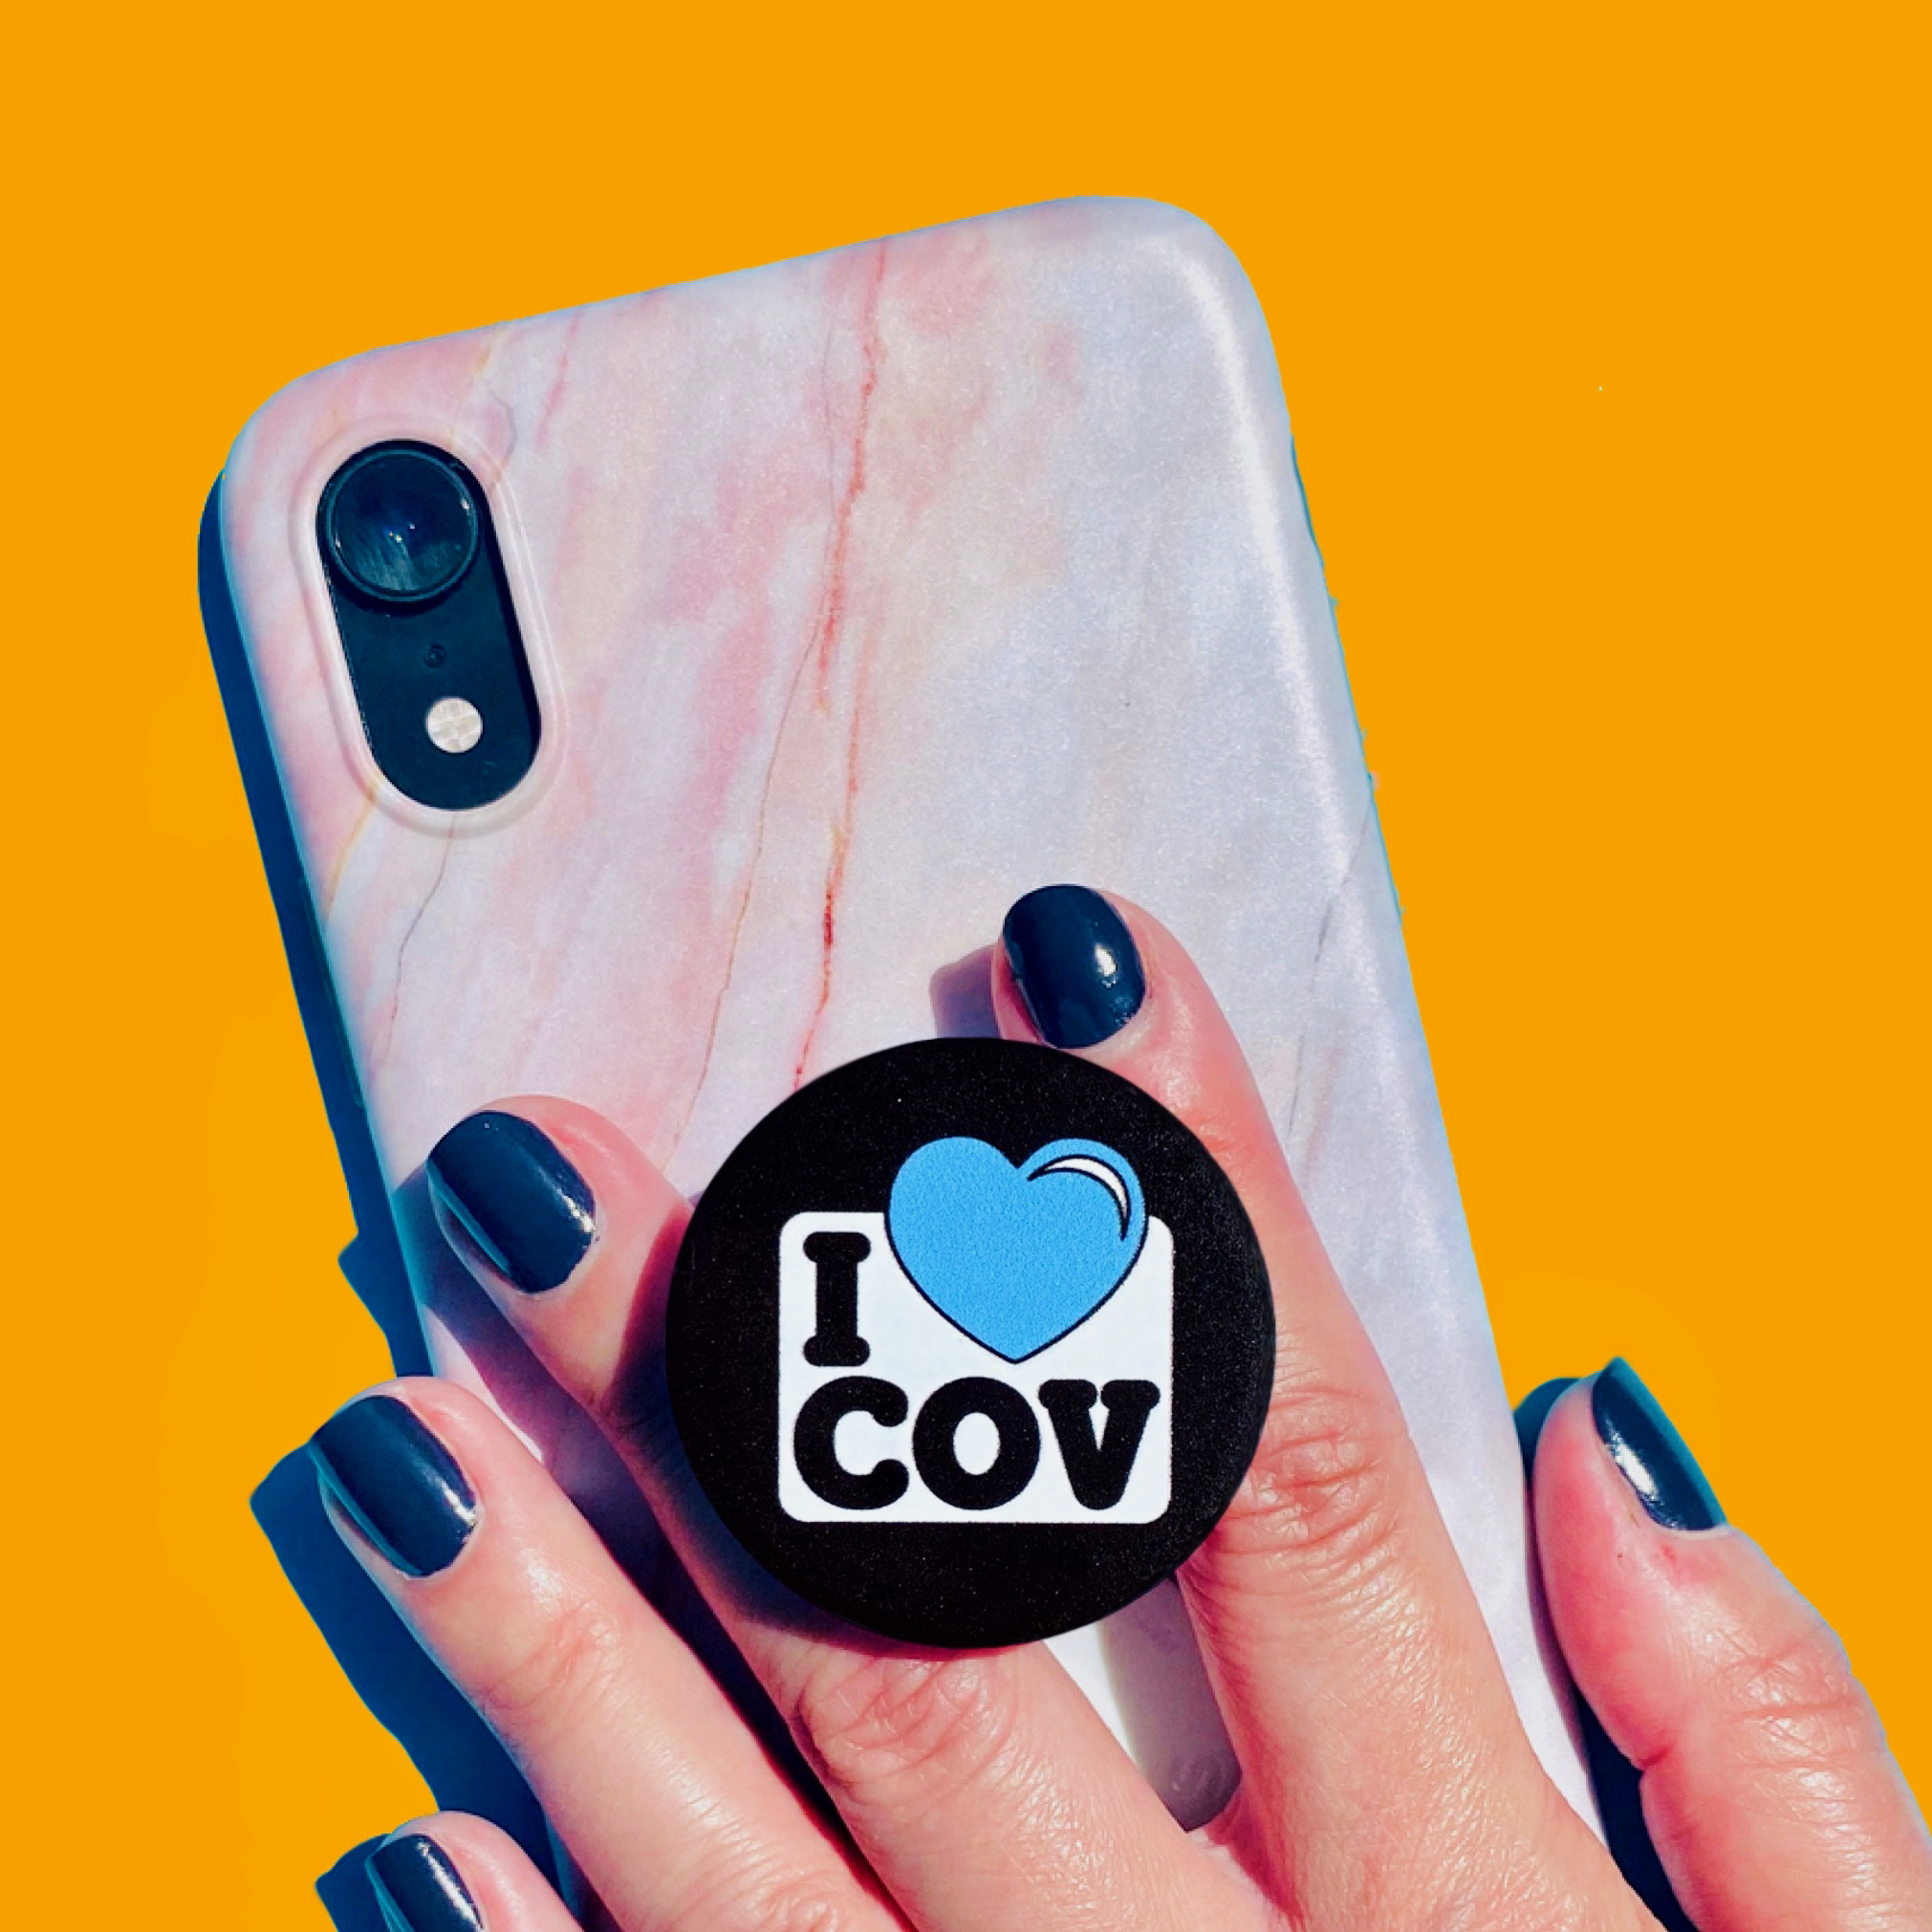 COVENTRY PHONE GRIPS - I LOVE COV